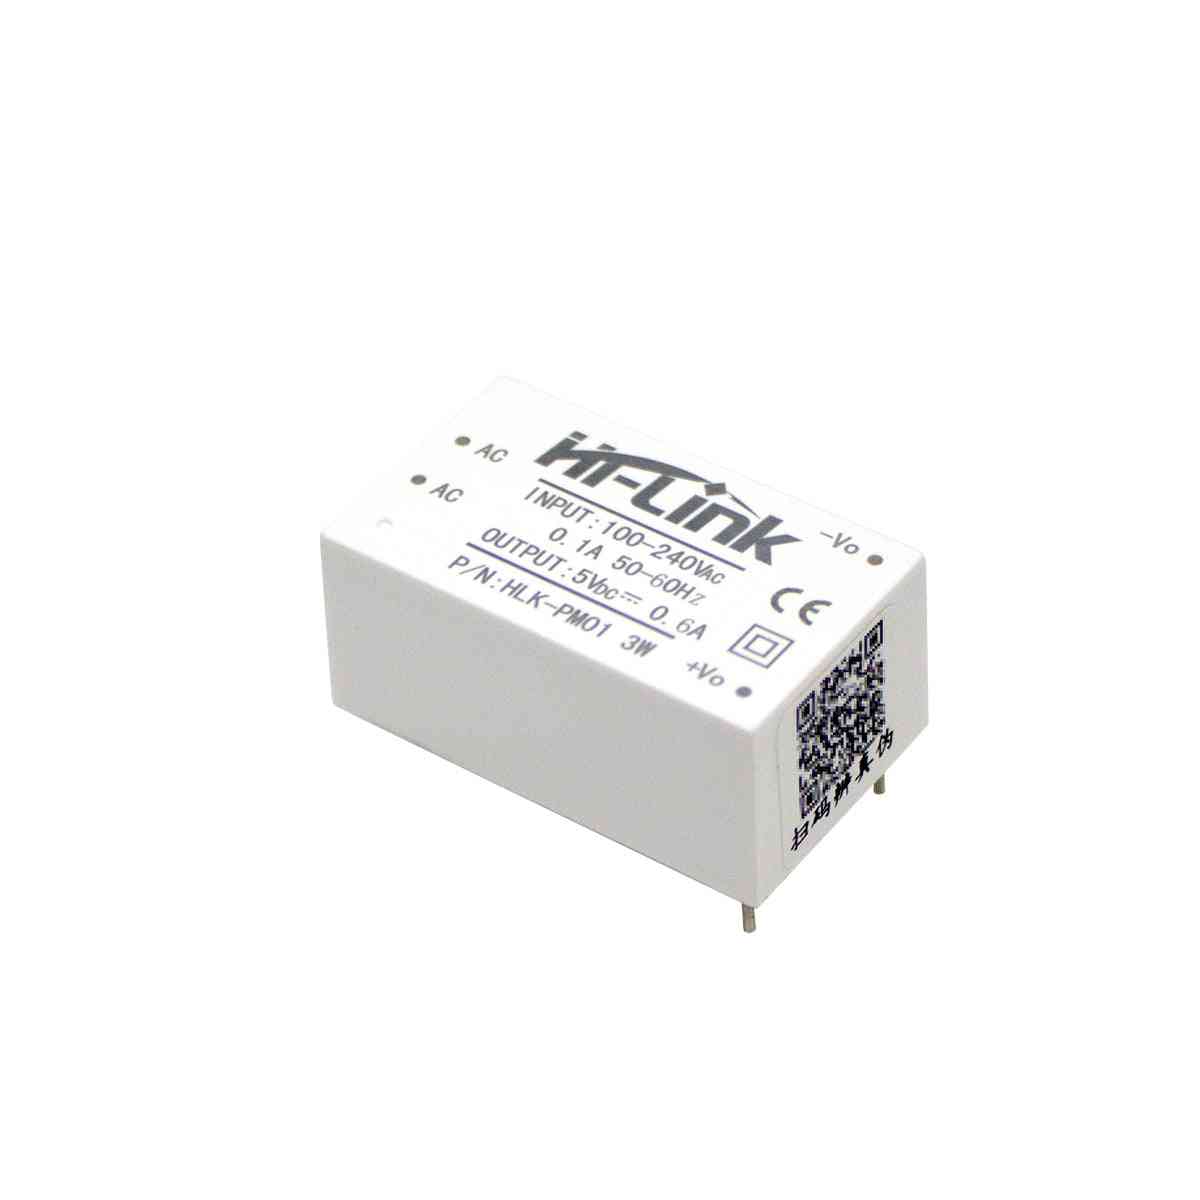 Smart-remote hlk-pm01 module d'alimentation blanc ac / dc -